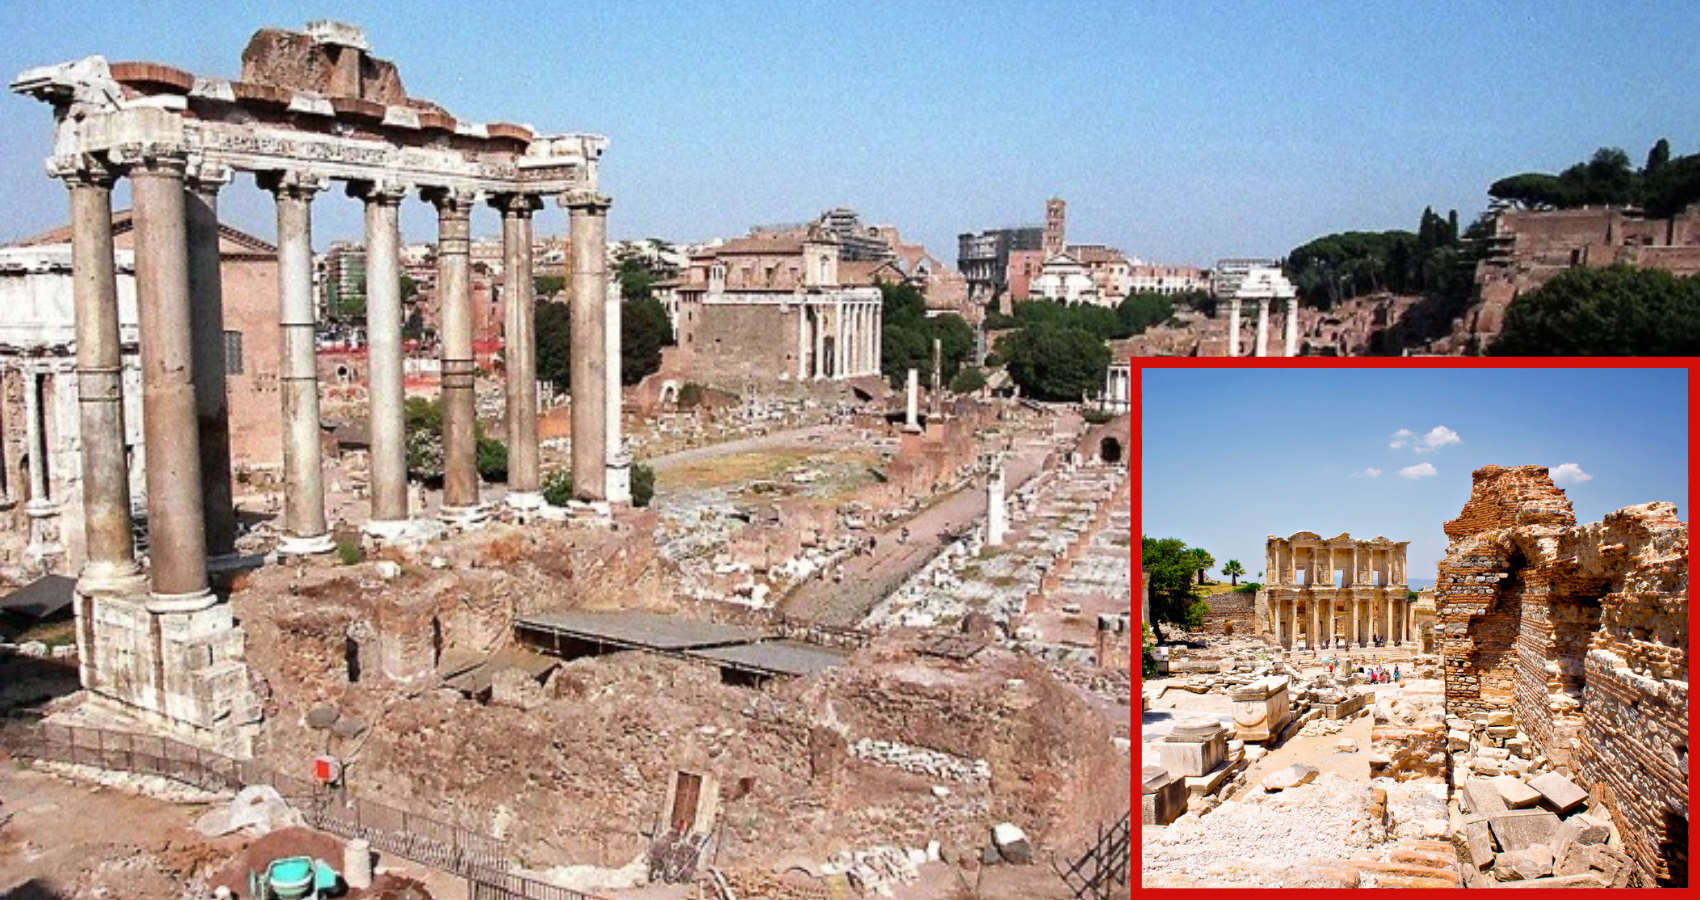 Royal Roman ruins go back to age of myth